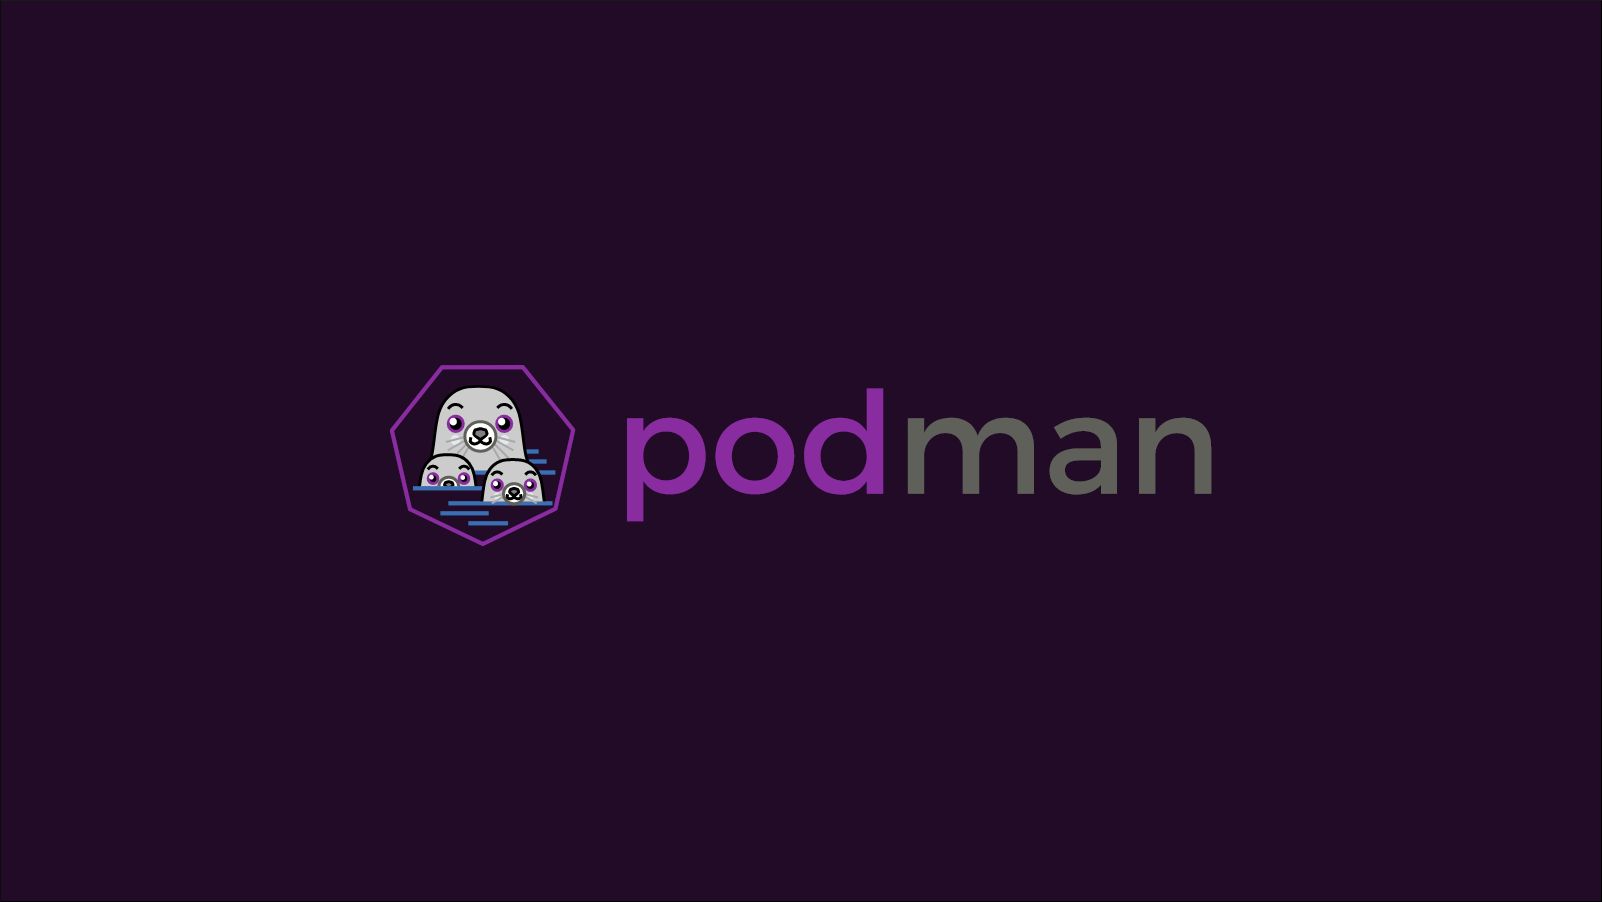 Graphic showing the Podman logo